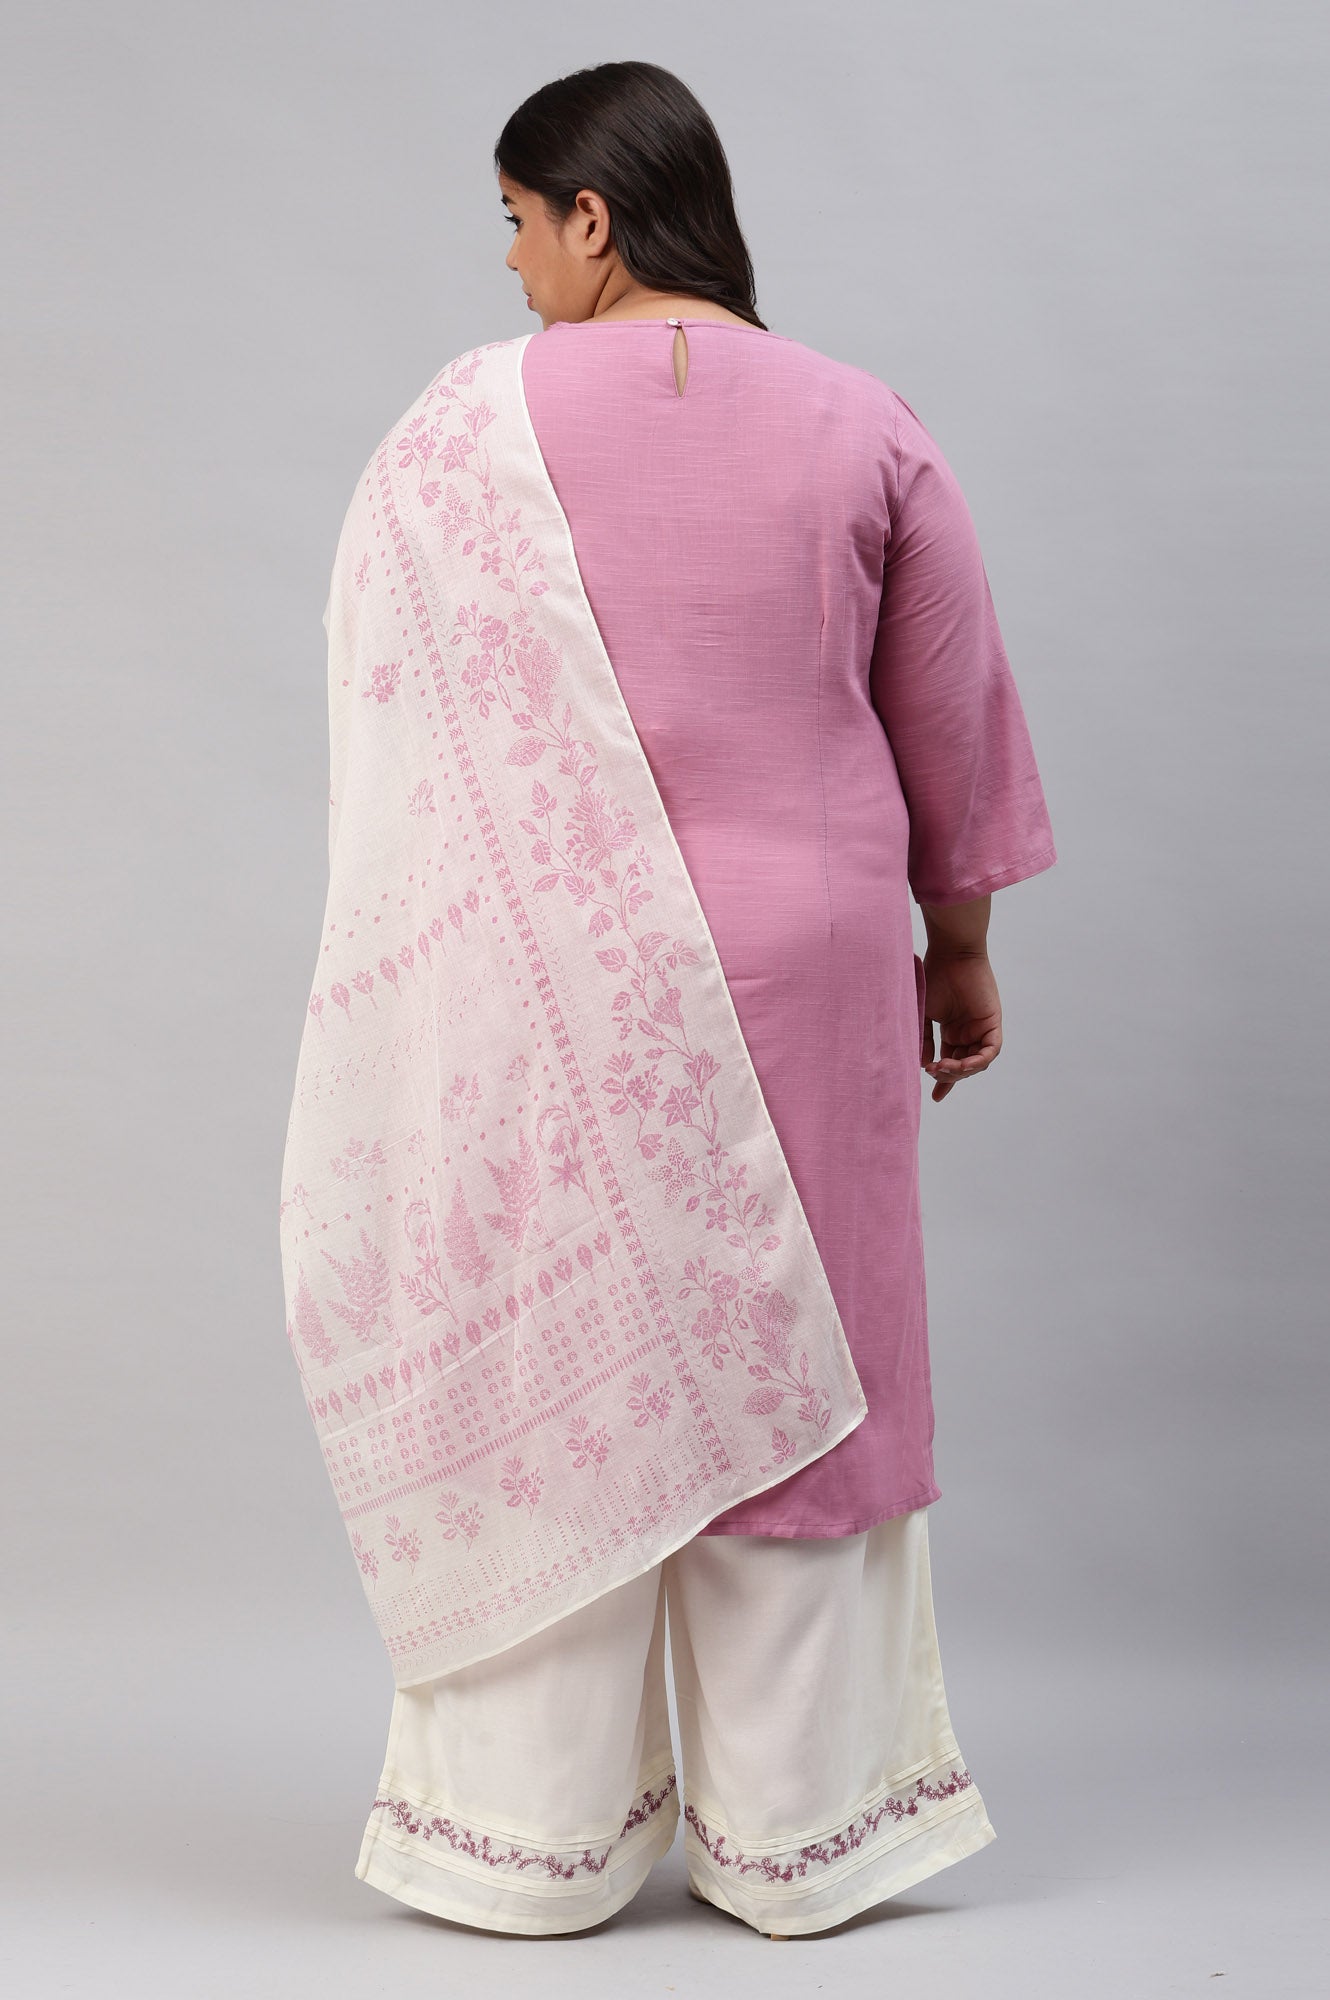 Liva Eco Plus Size Pink Embroidered kurta Off-White Pants And Dupatta Set